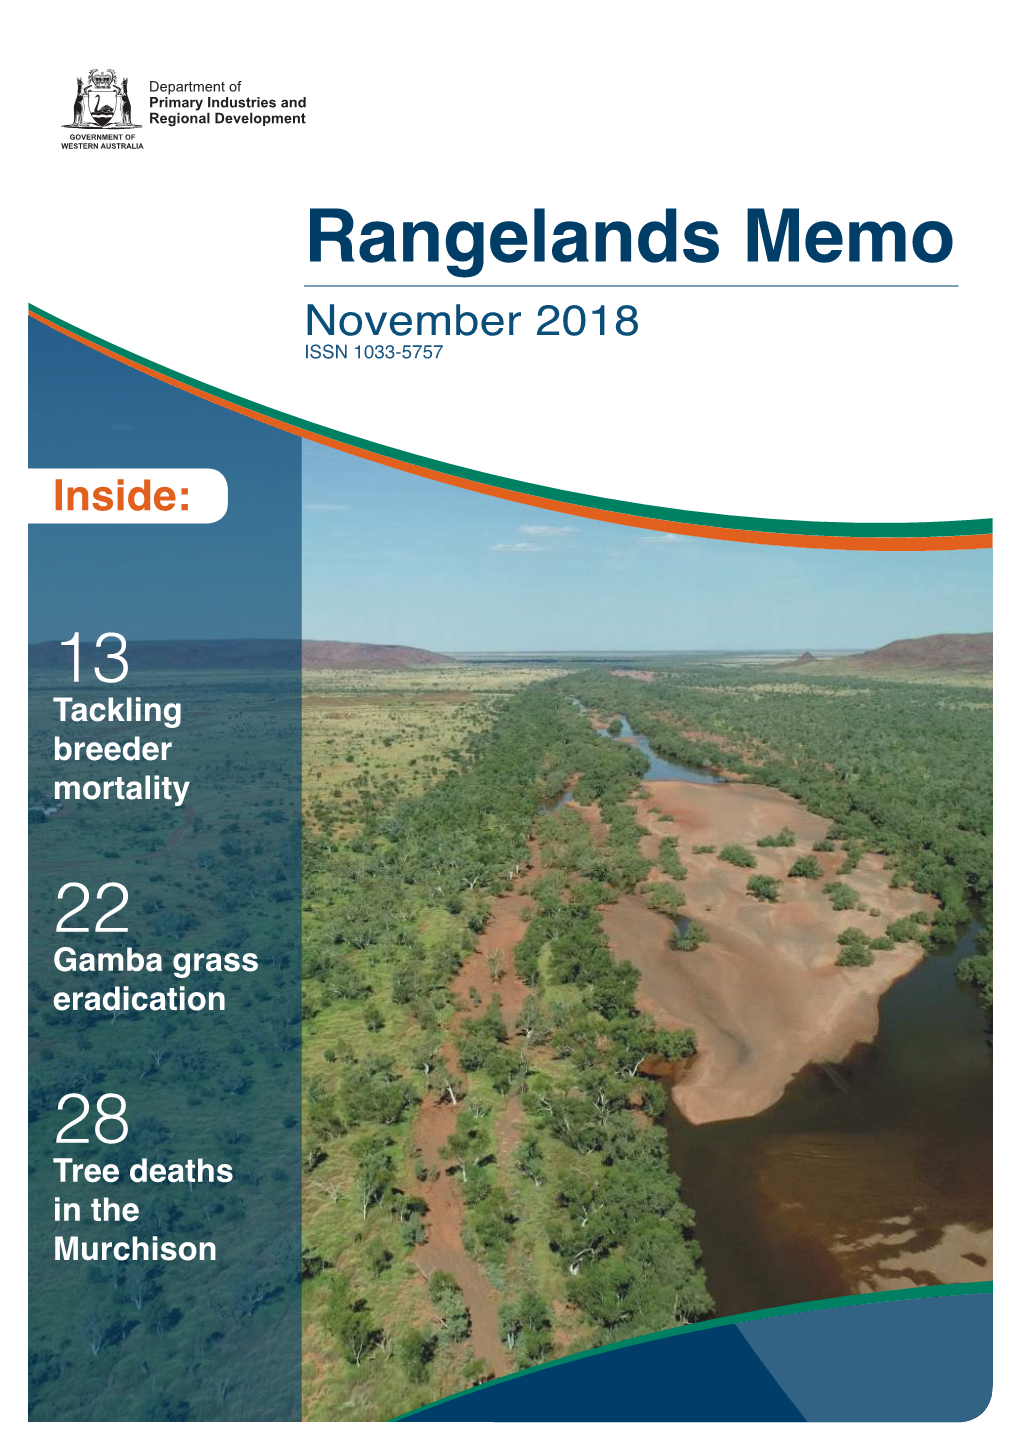 Rangelands Memo November 2018 ISSN 1033-5757